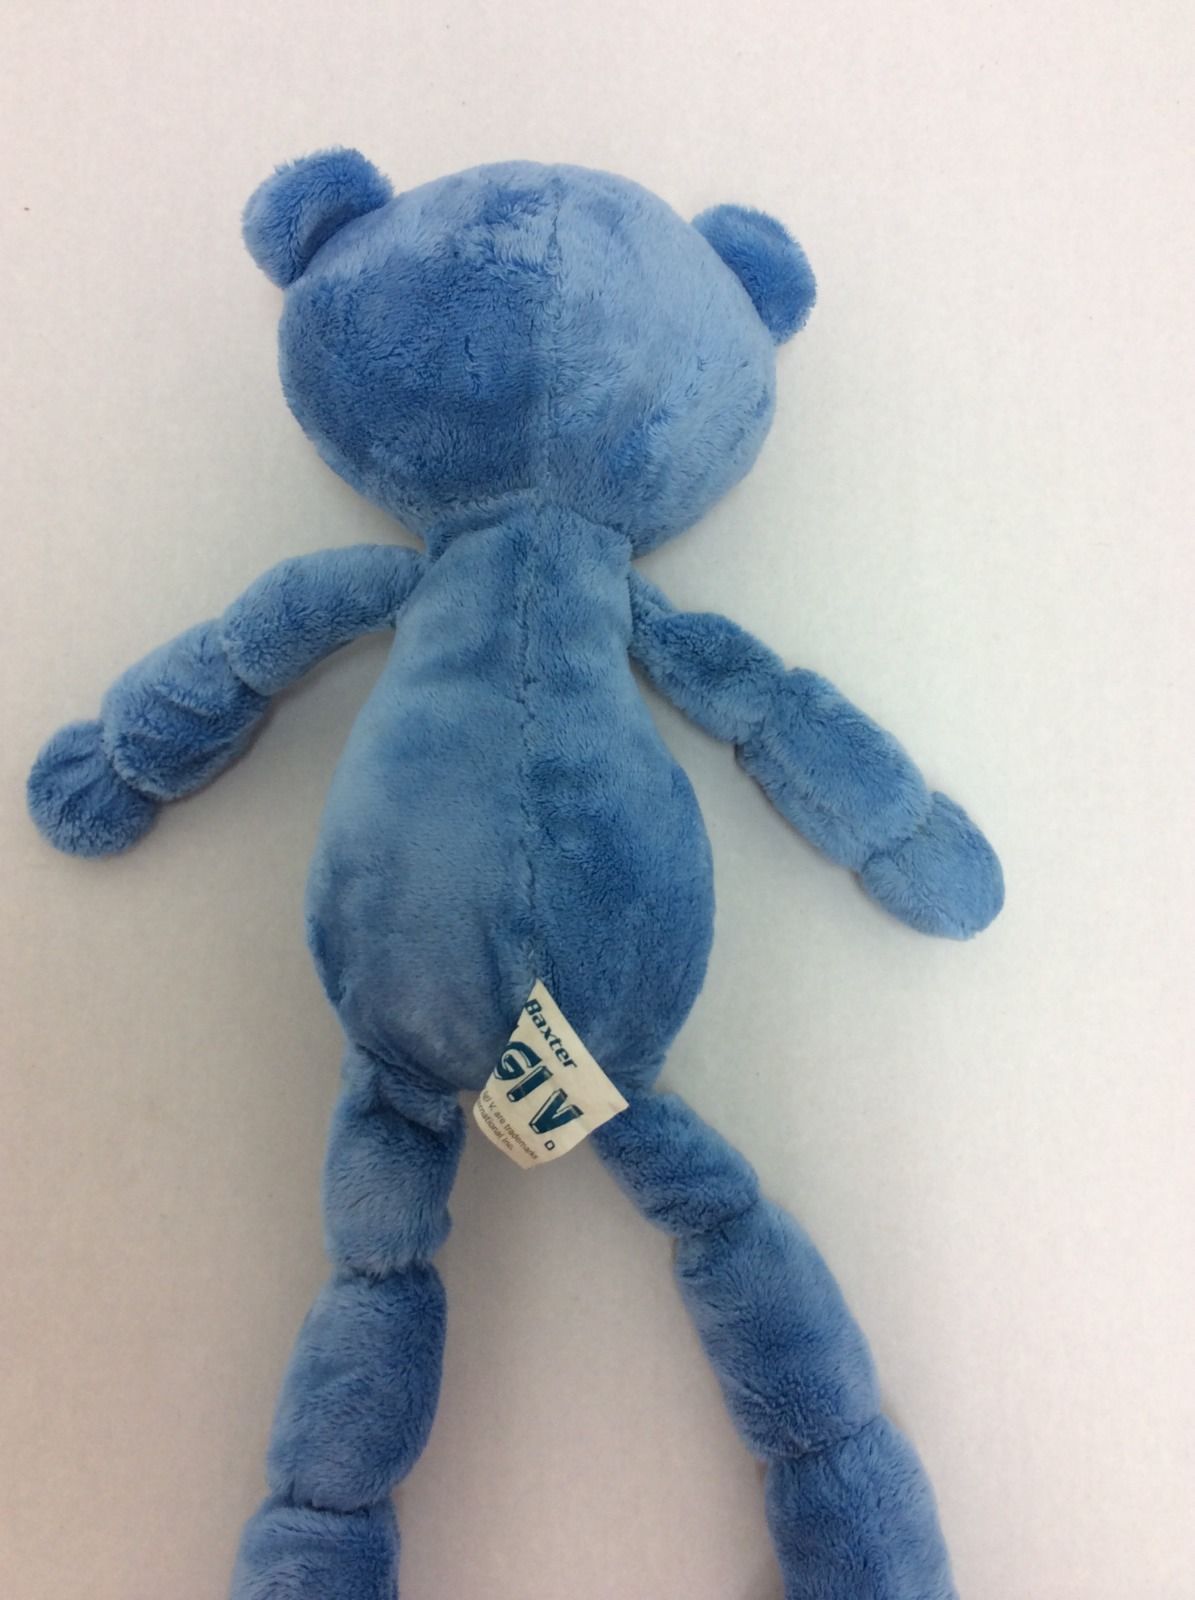 Baxter IGI V Blue Teddy Bear Plush Long Arms Legs 17